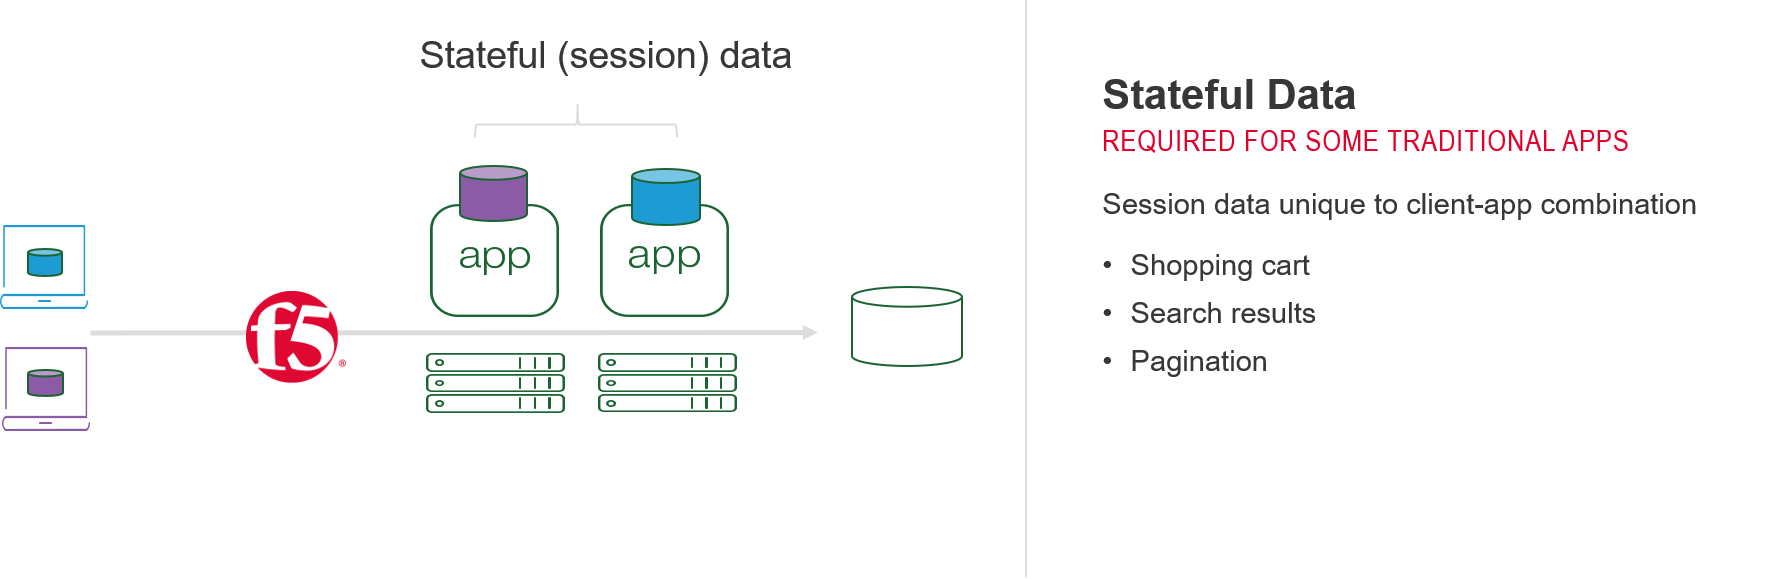 Stateful sessions data